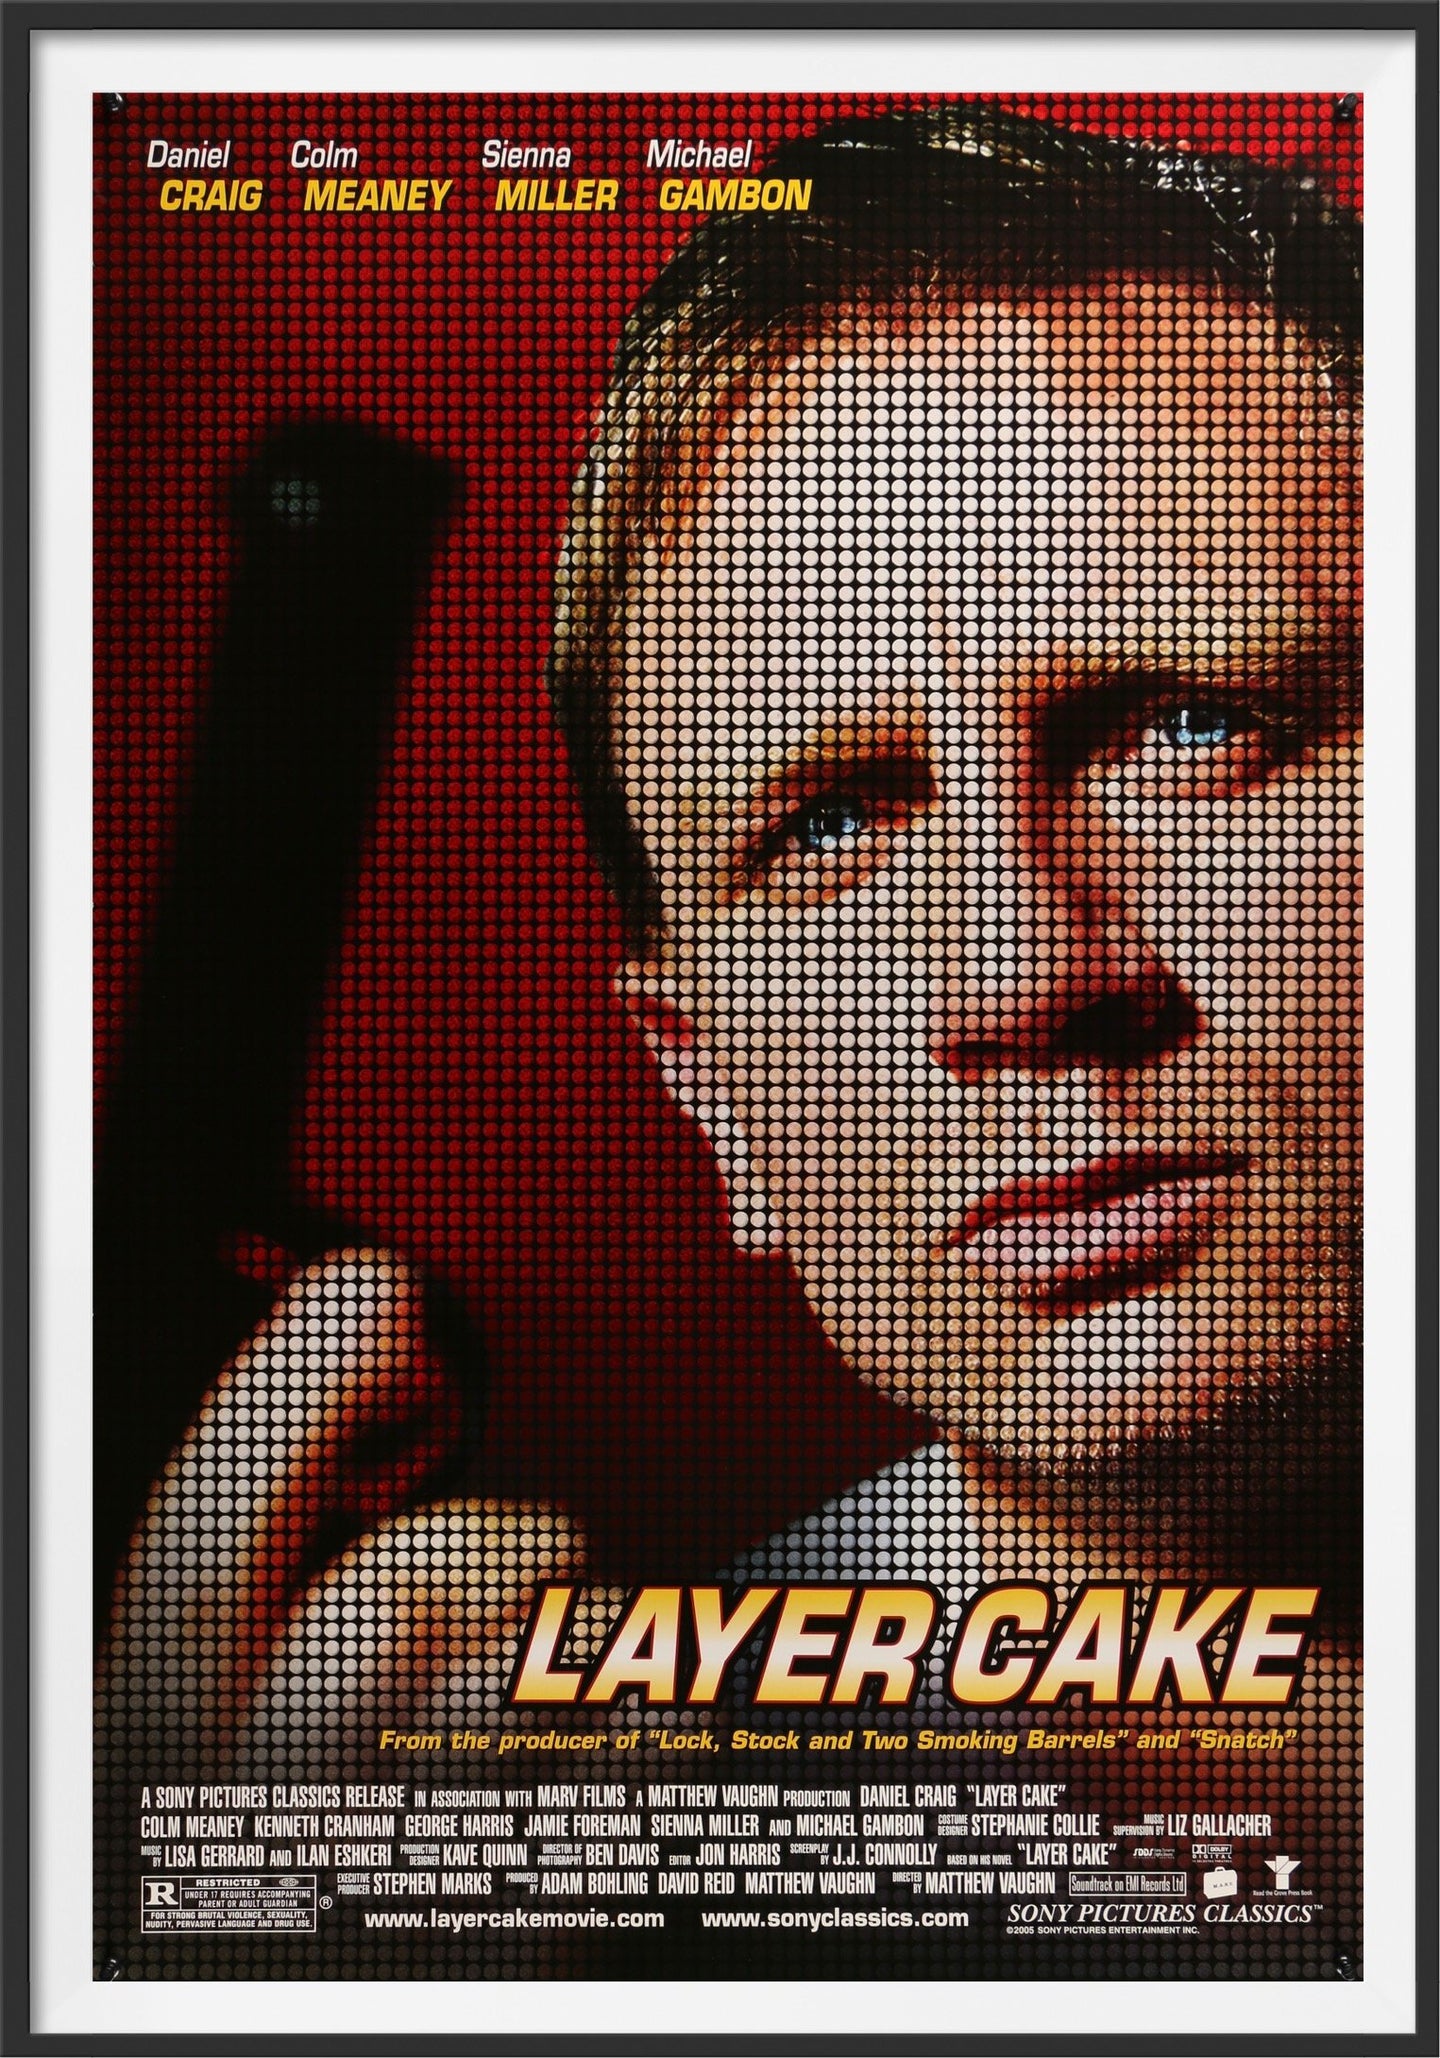 An original movie poster for the Matthew Vaughn crime thriller Layer Cake starring Daniel Craig